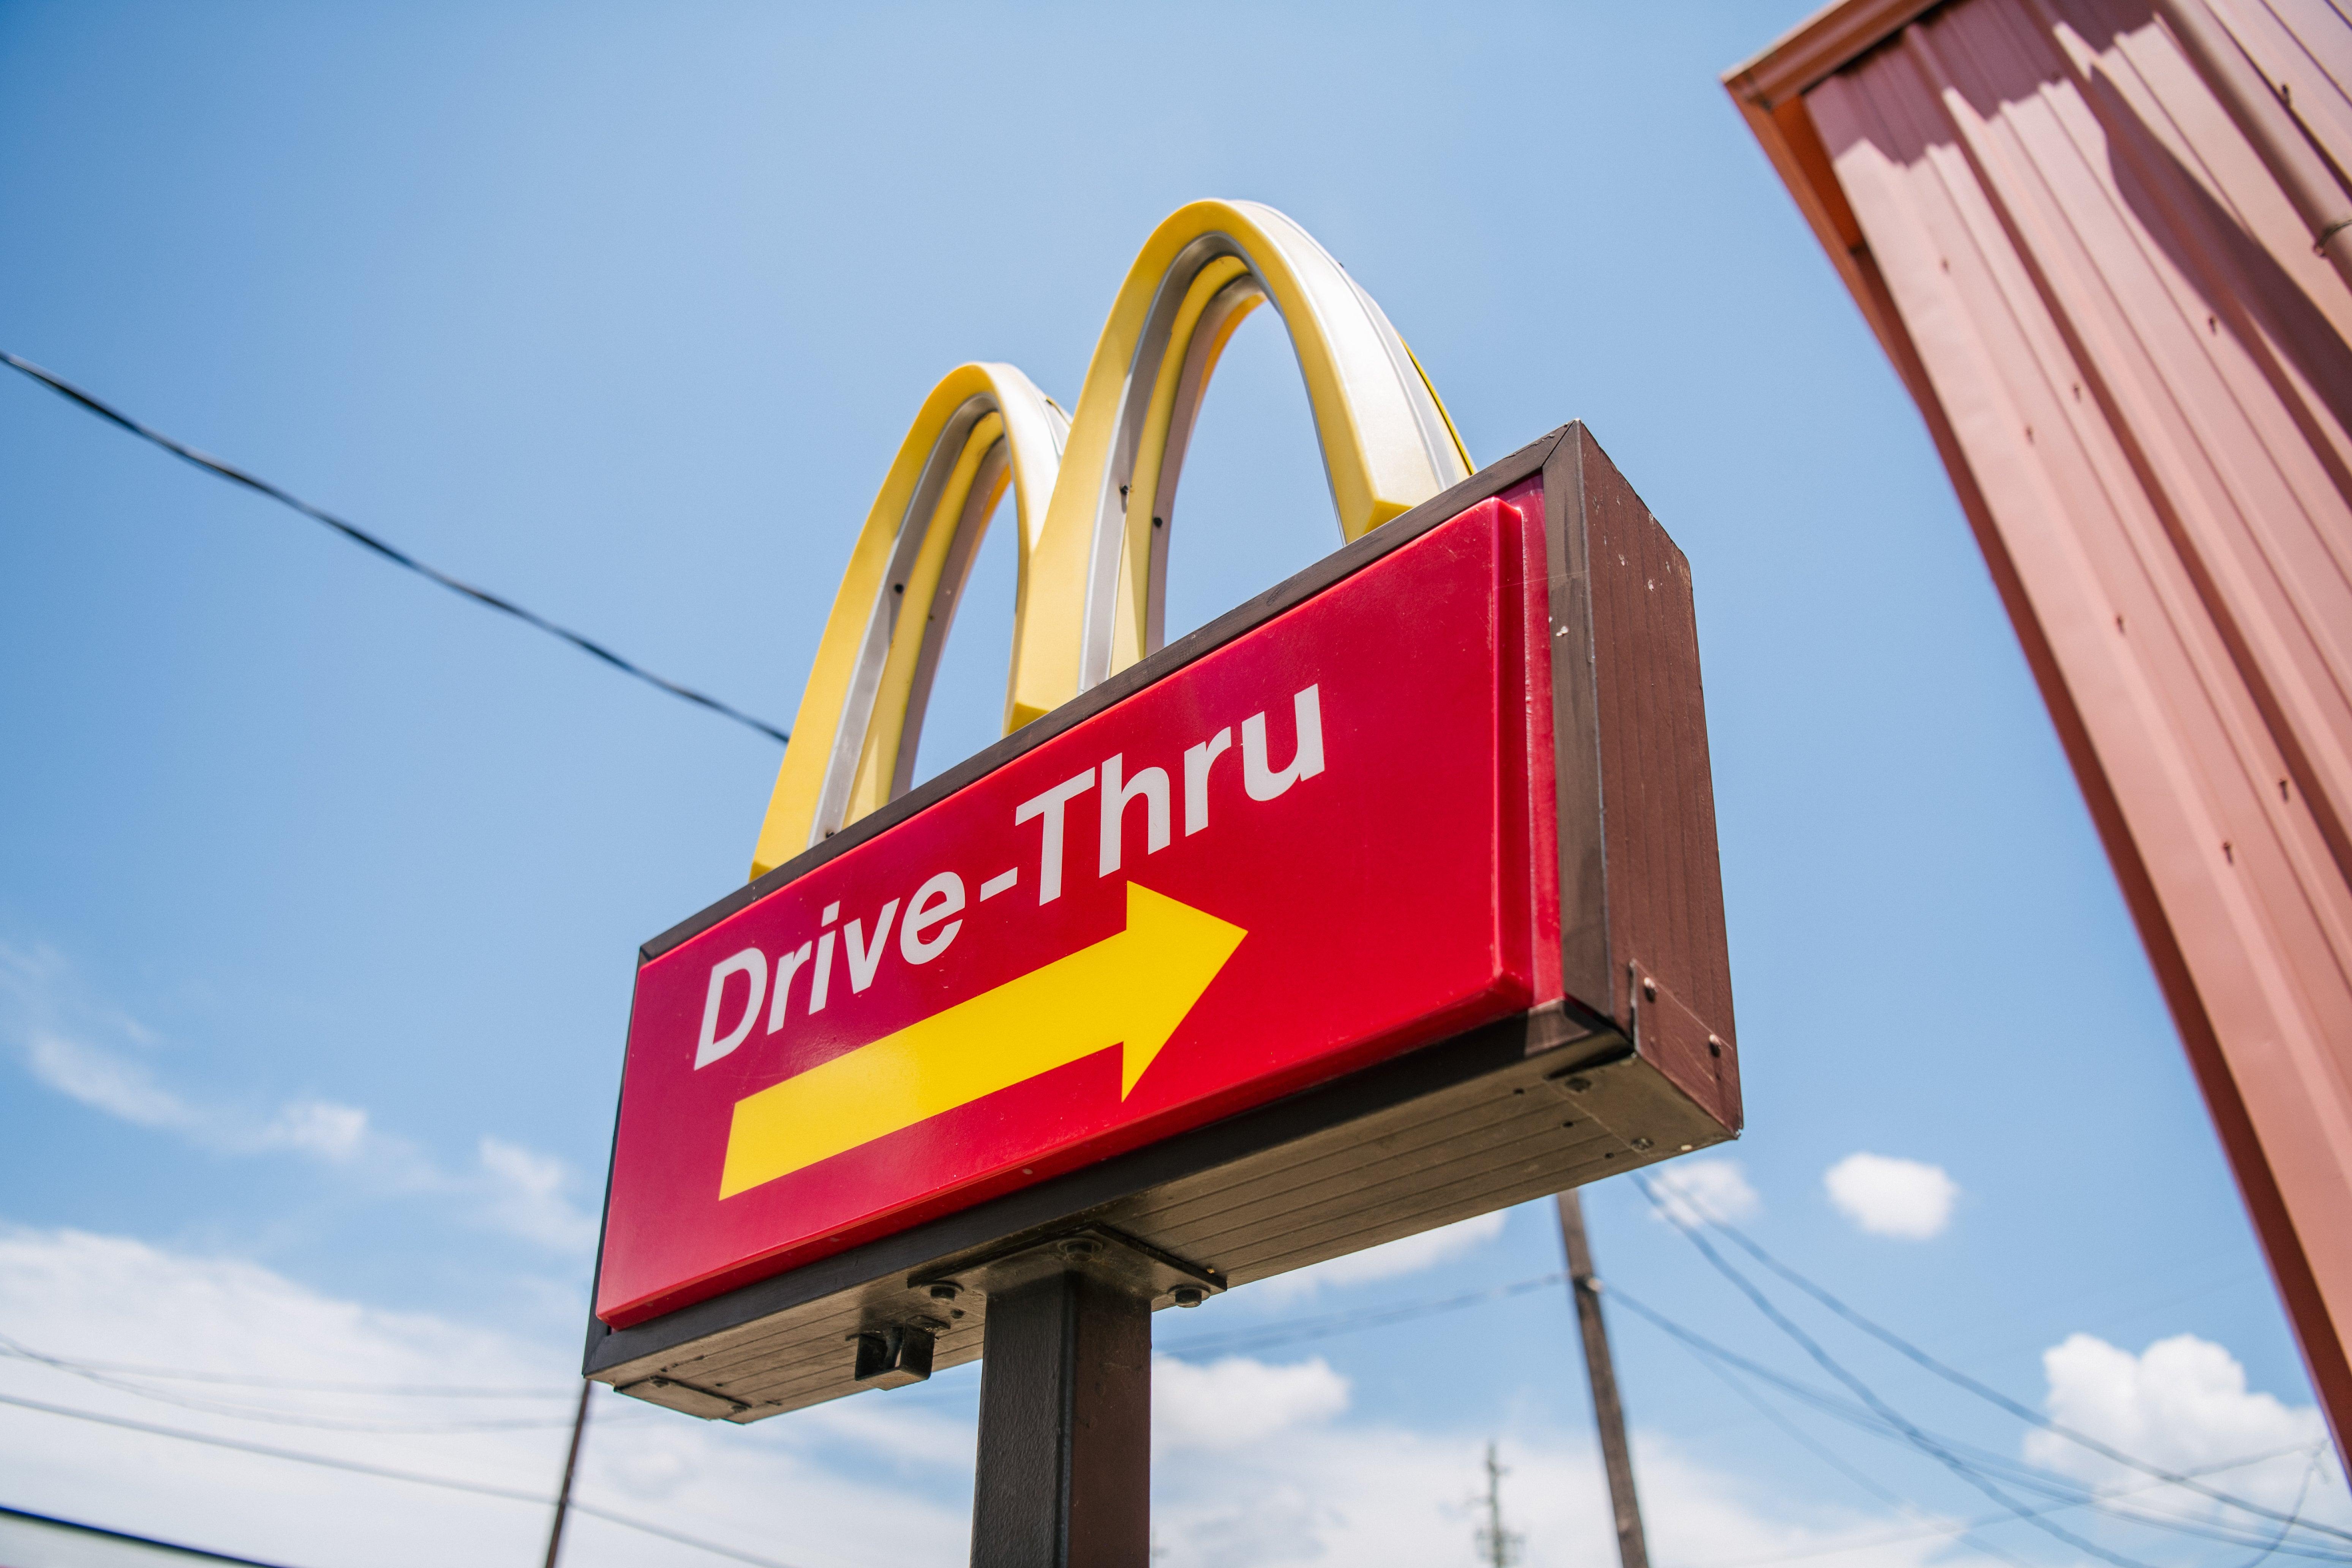 Representational: A McDonald’s sign board in Texas